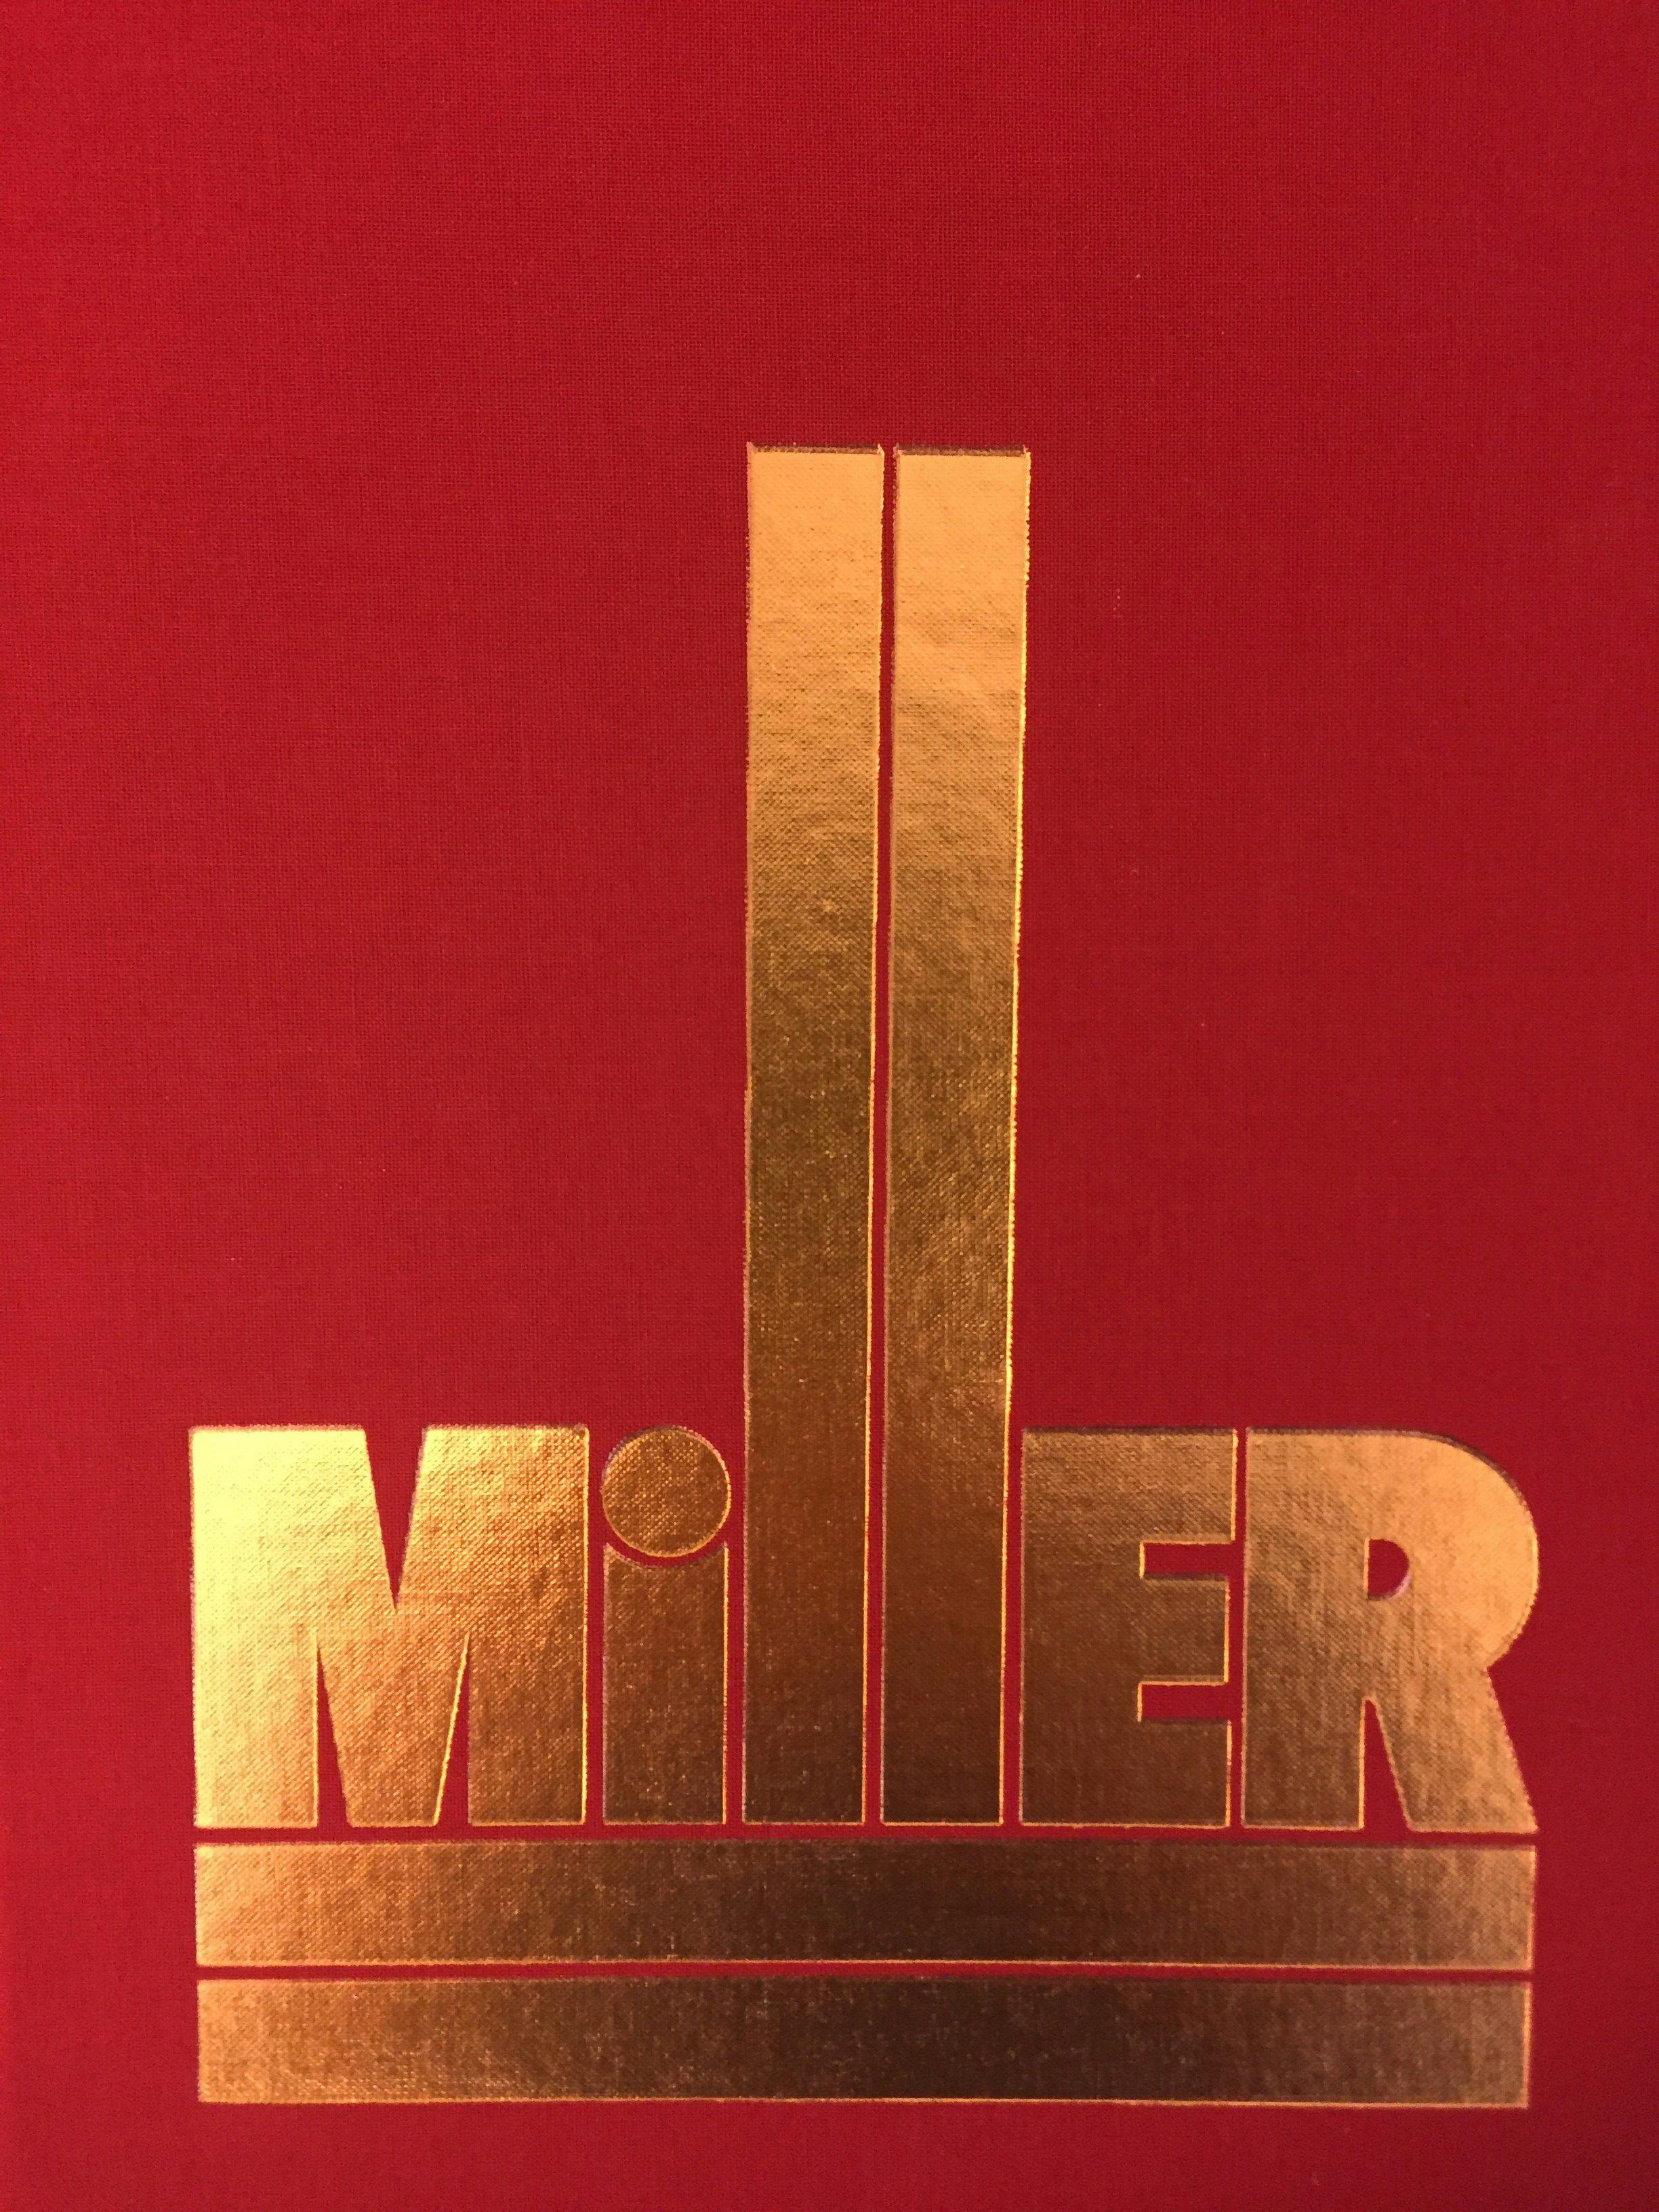 The Miller Company logo